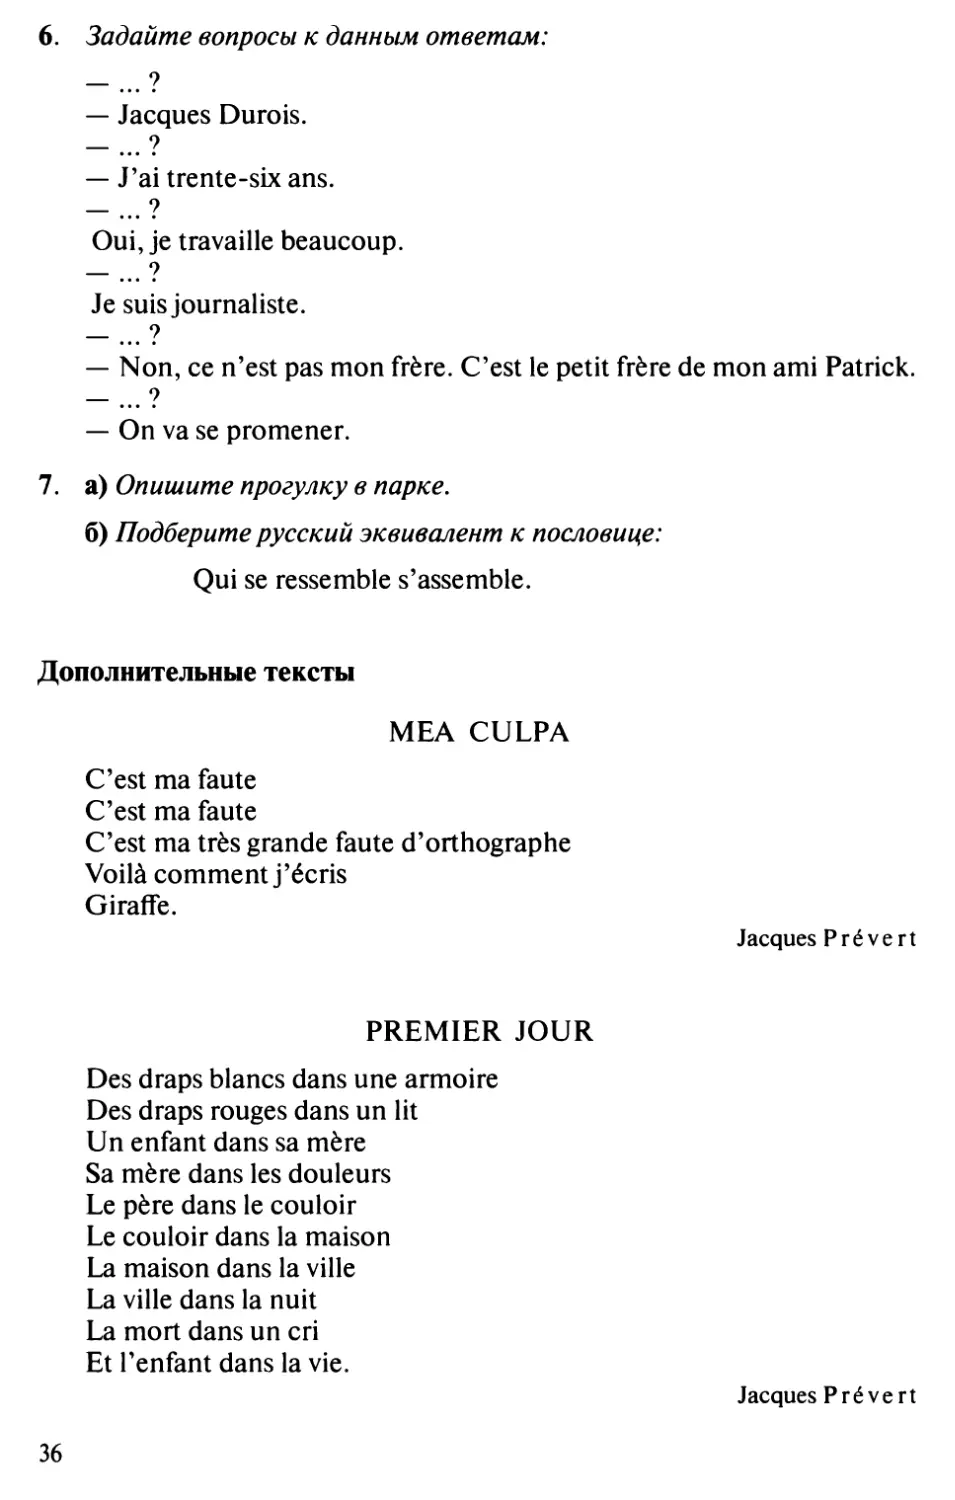 Дополнительные тексты: Jacques Prévert, Меа culpa, Premier jour